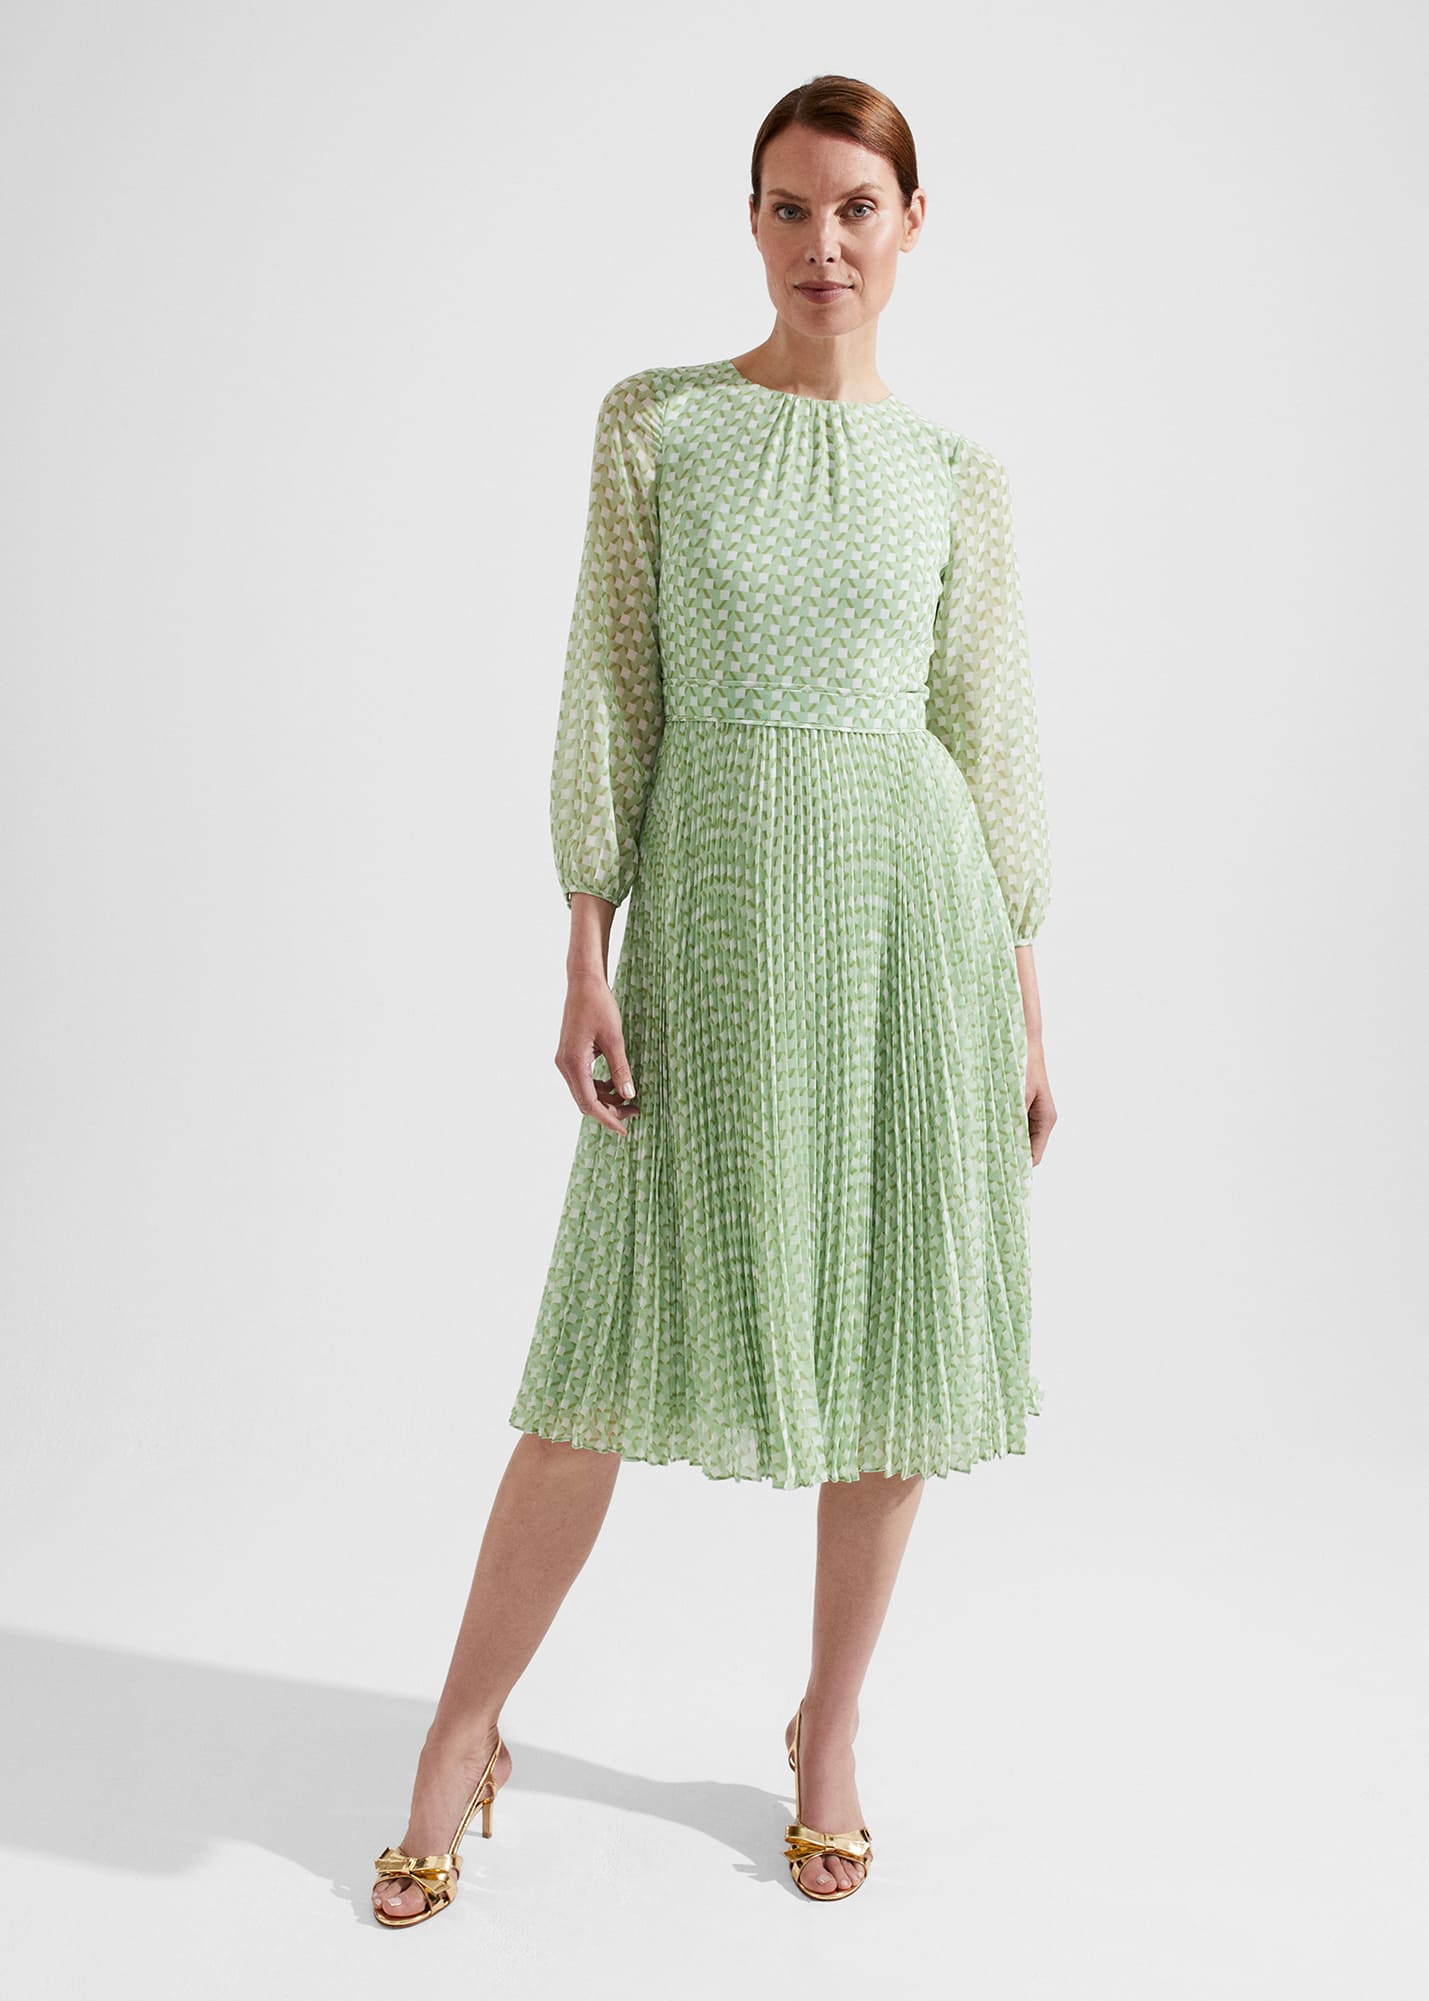 Hobbs Women's Petite Salma Dress - Green Multi